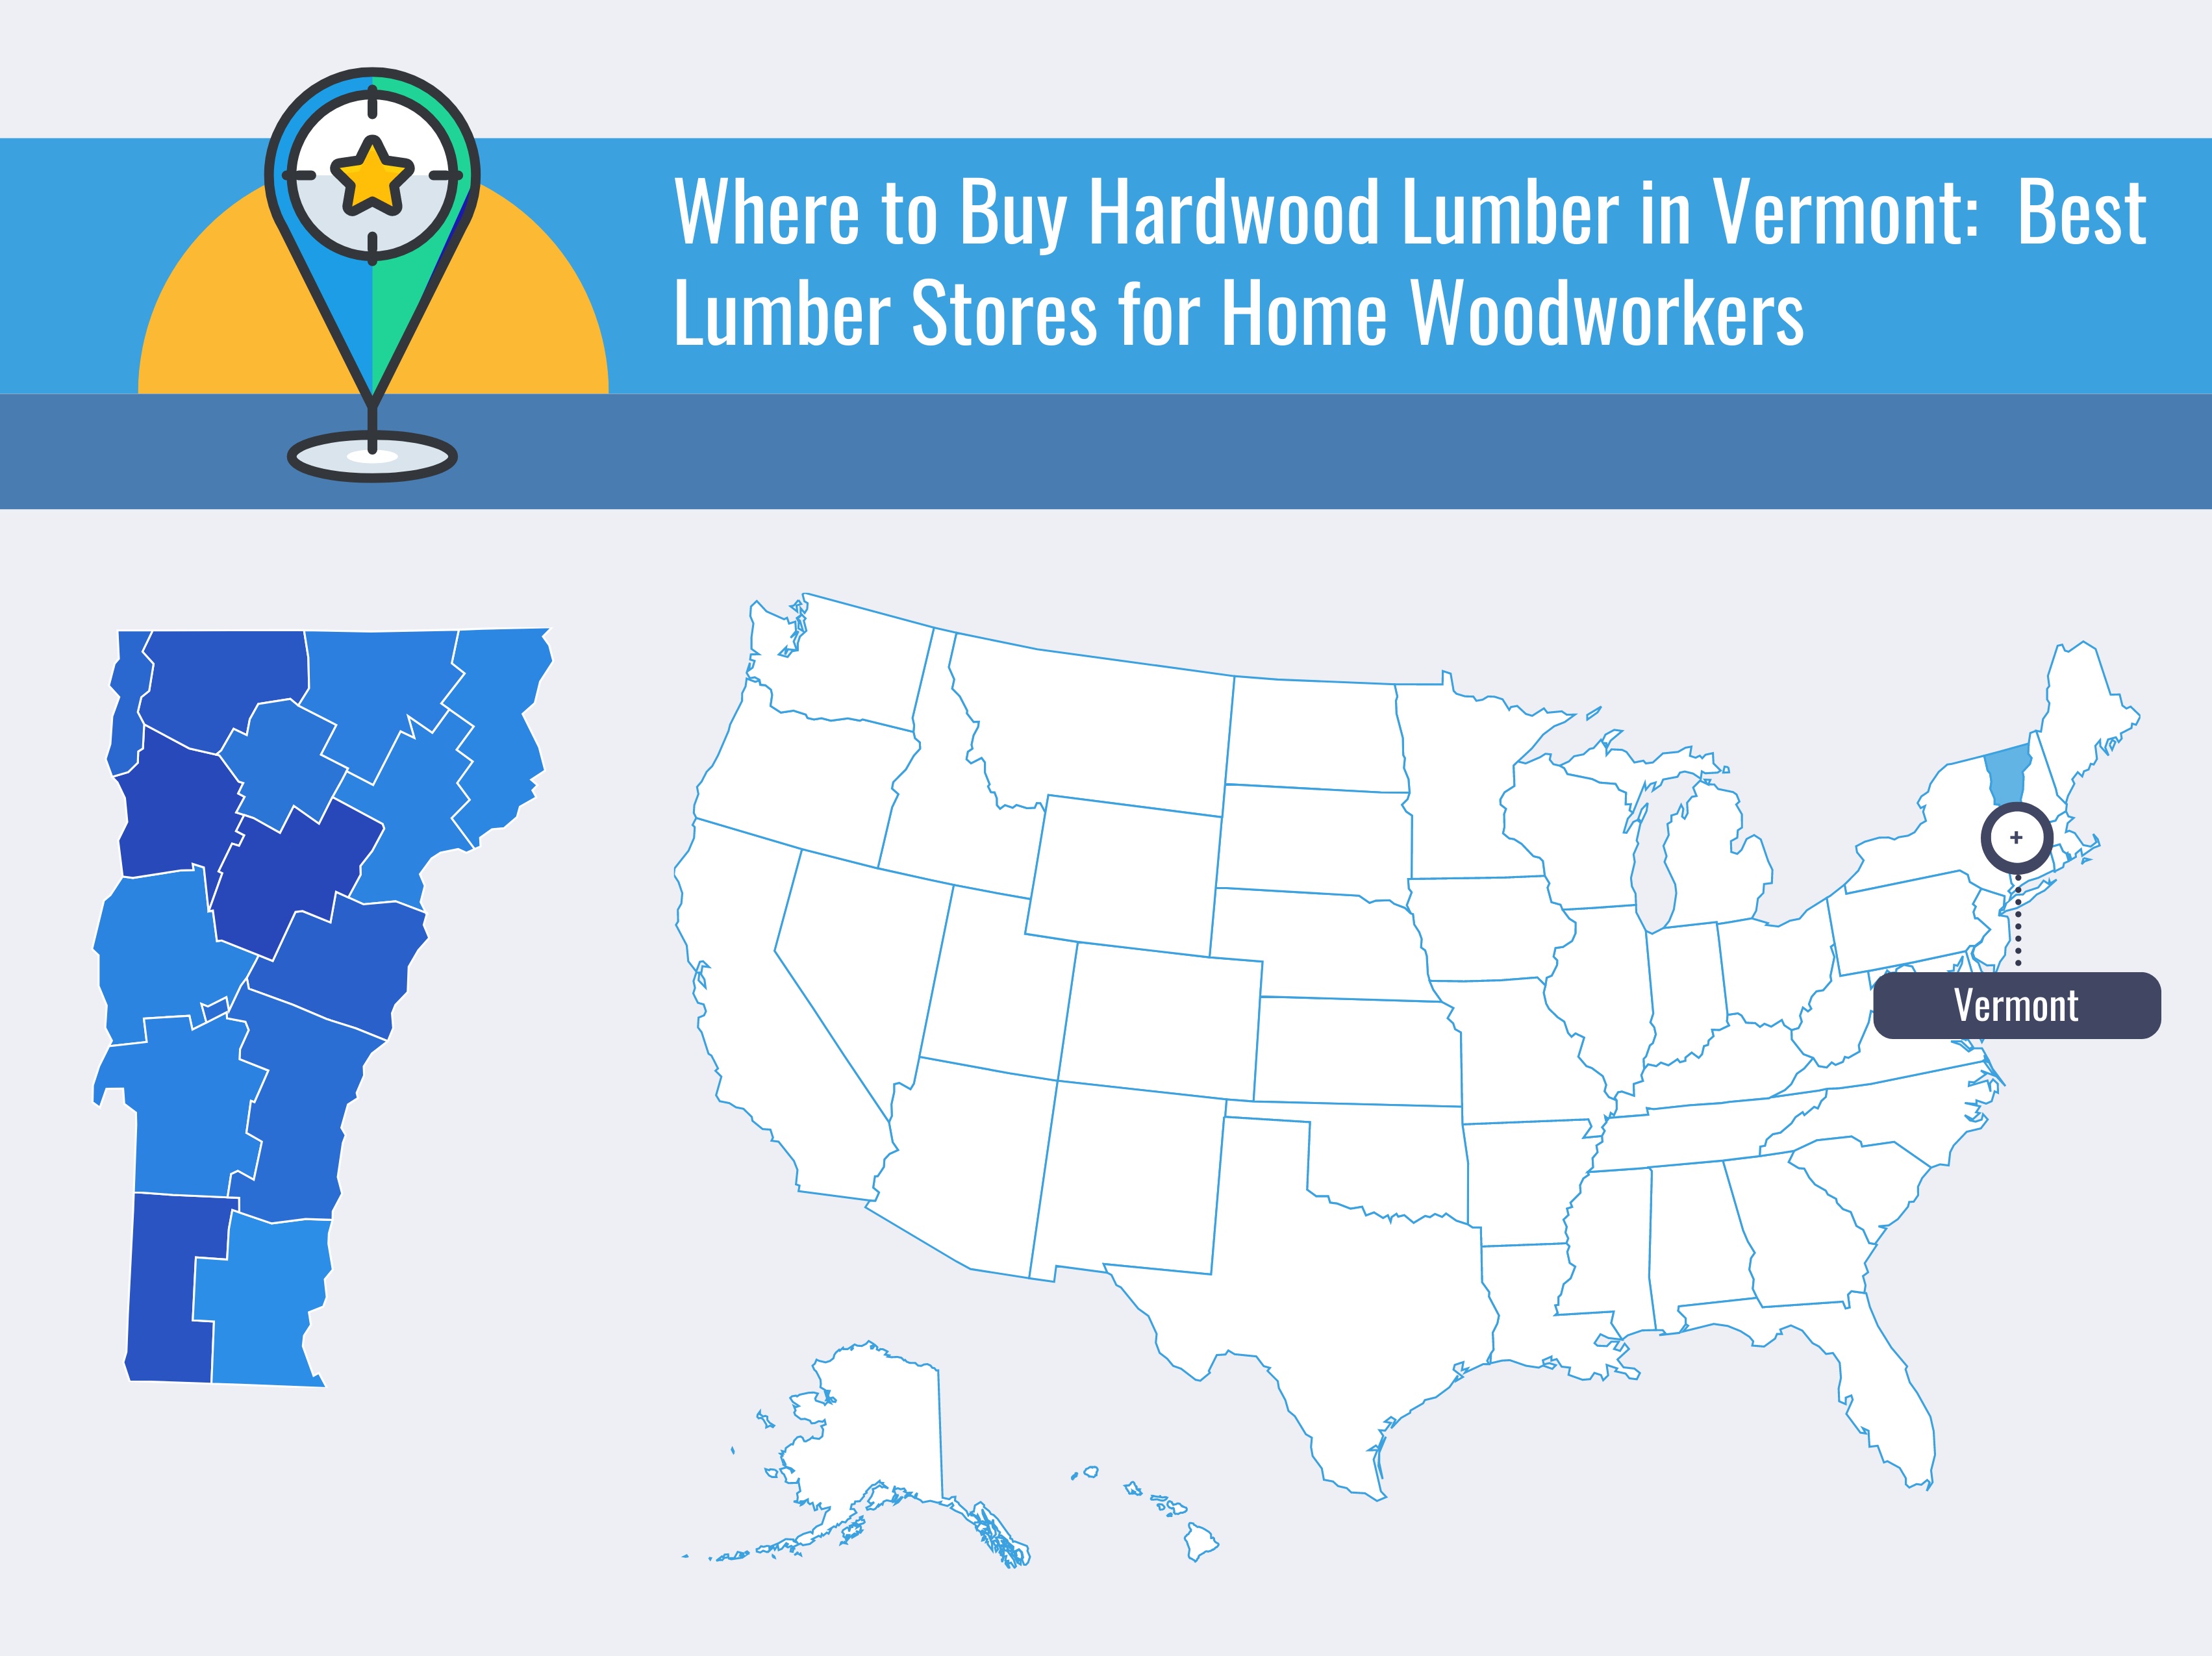 Where to Buy Hardwood Lumber in Vermont